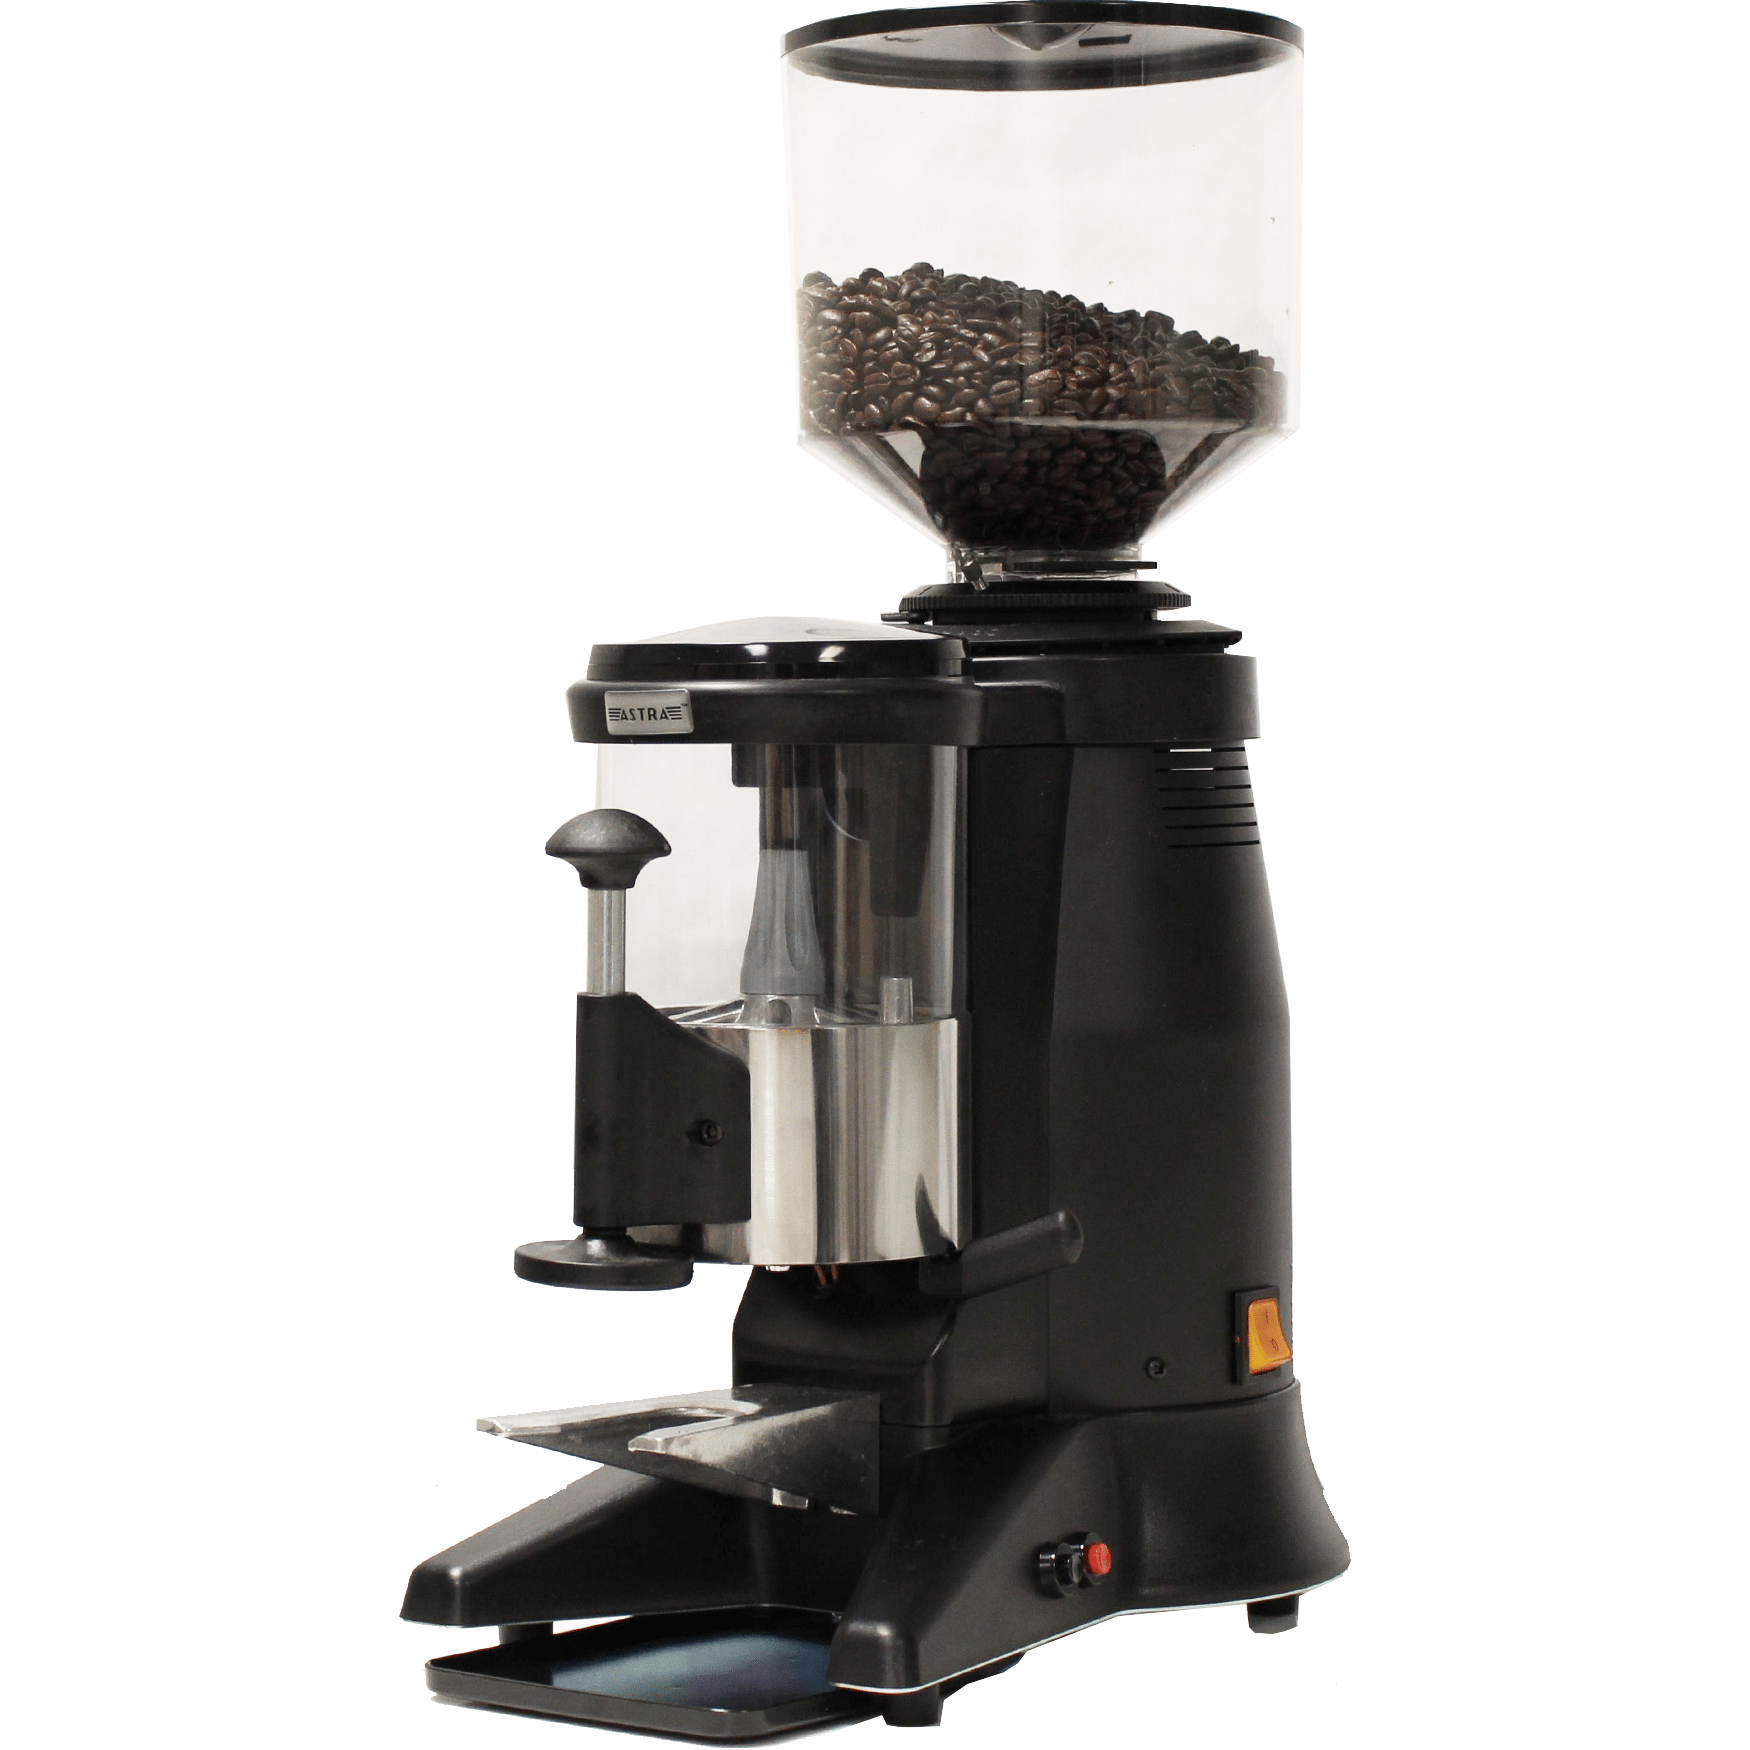 Hot Draft Coffee Dispenser - Medium Volume (220V)